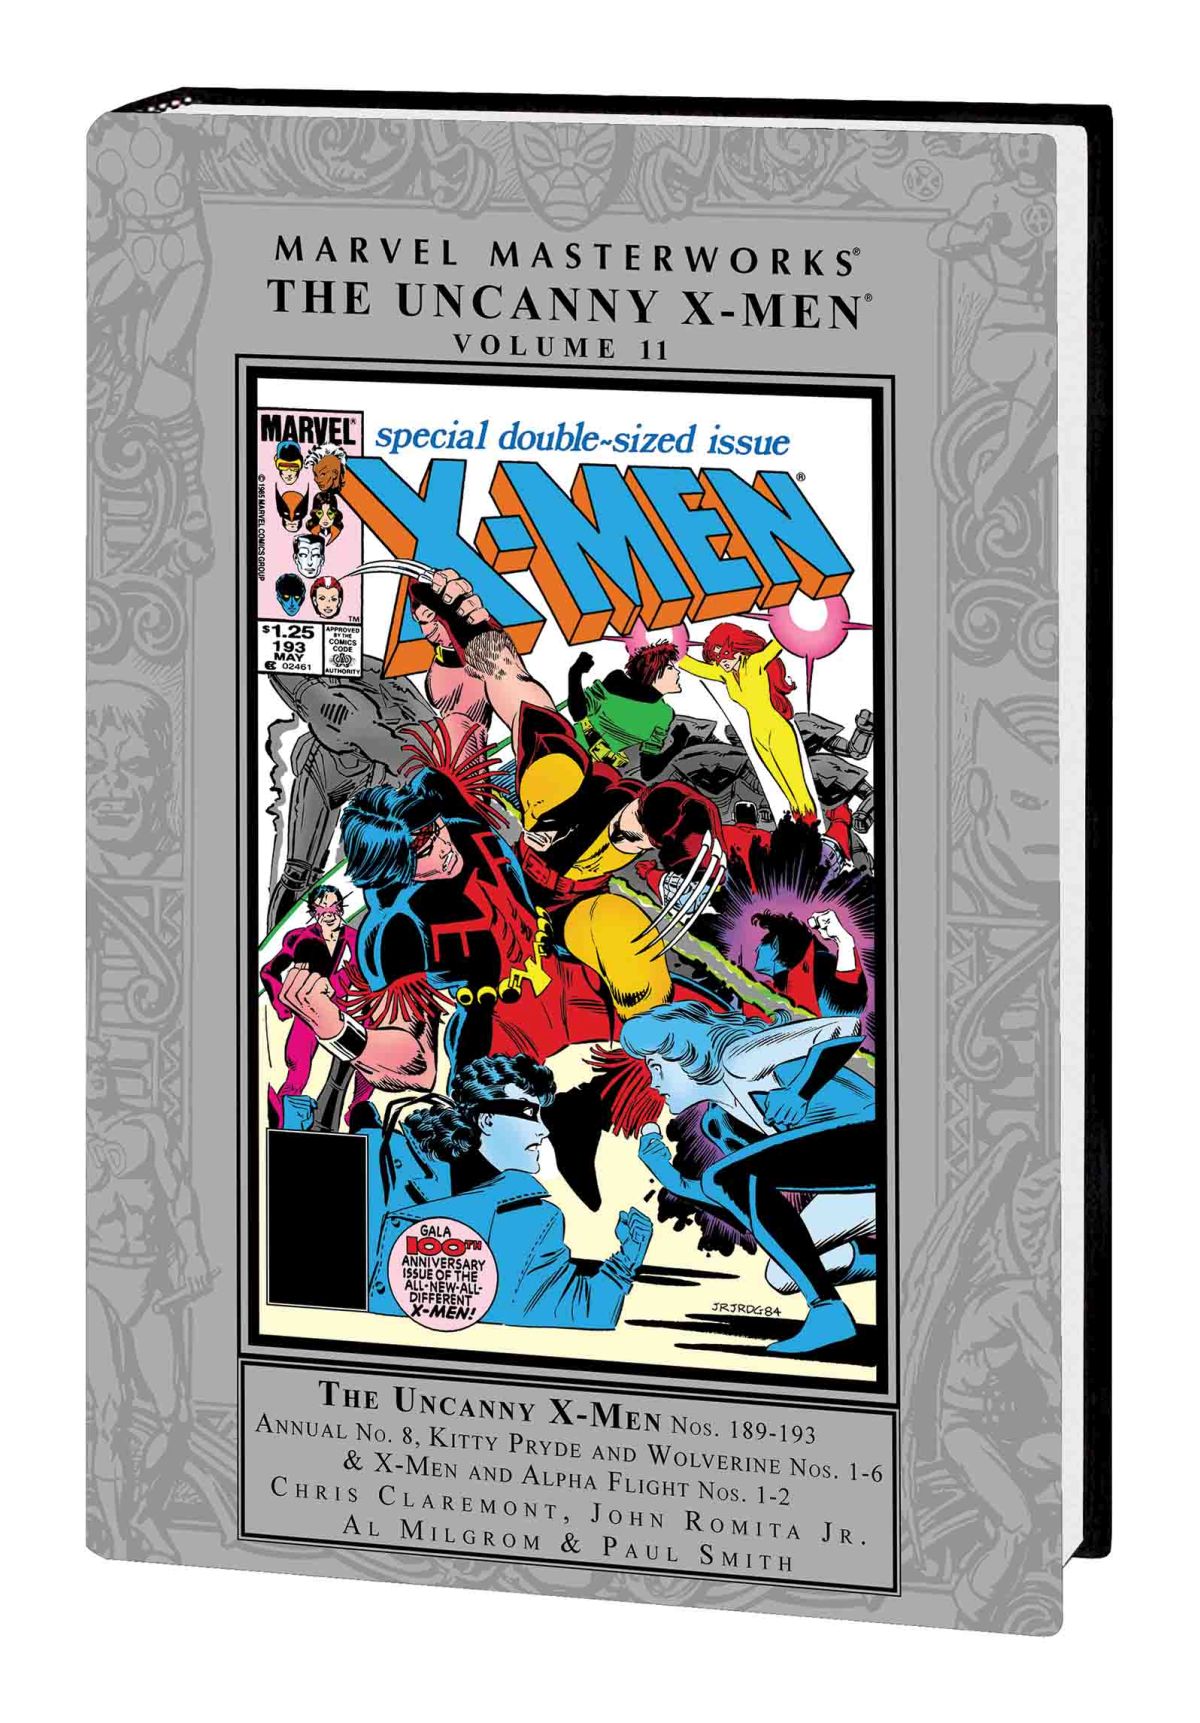 MARVEL MASTERWORKS: THE UNCANNY X-MEN VOL. 11 HC